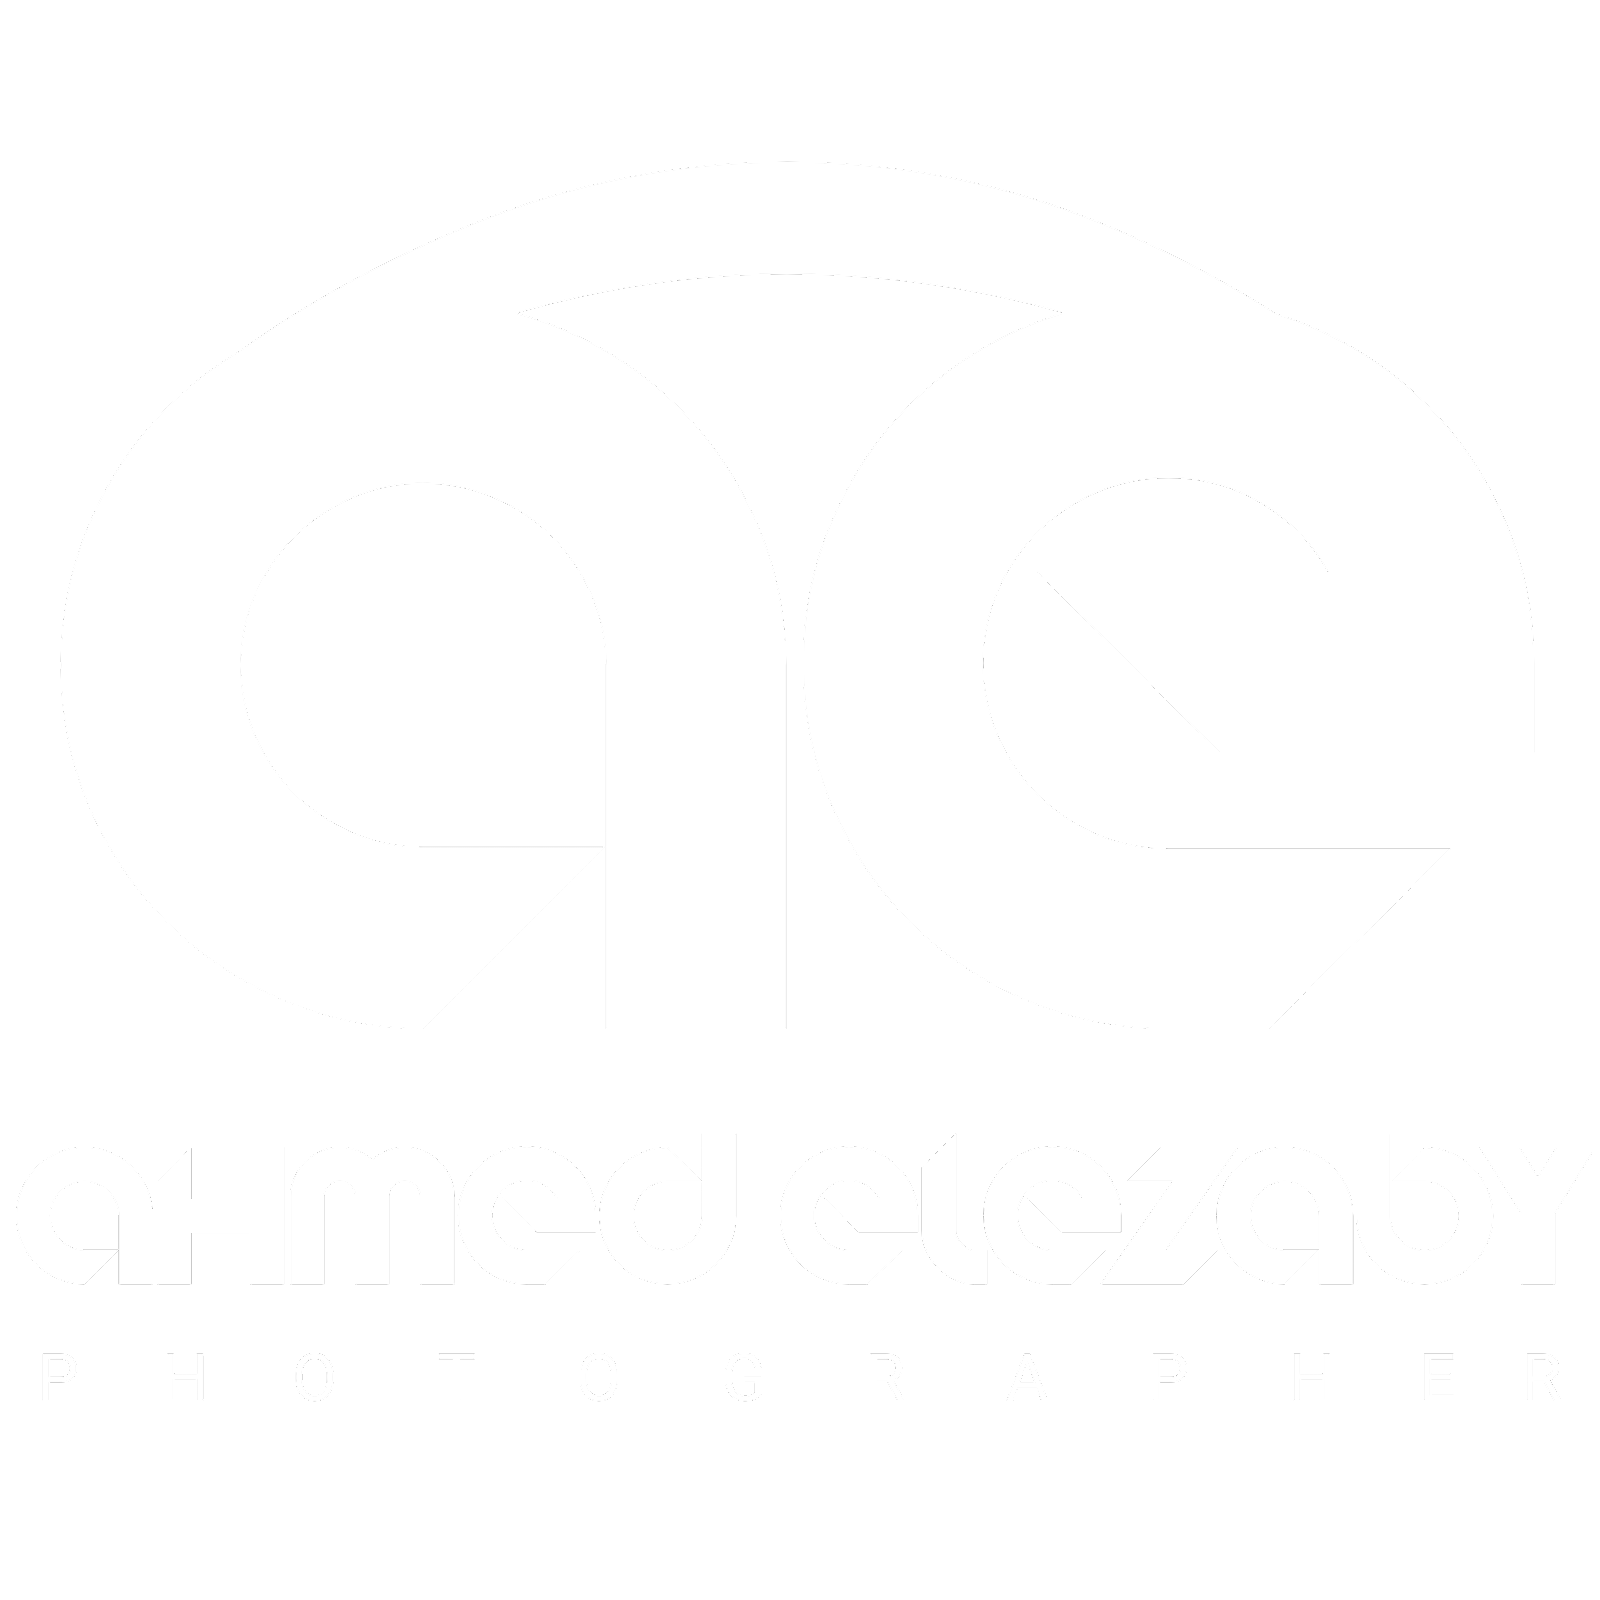 AHMED ELEZABY PHOTOGRAPHER